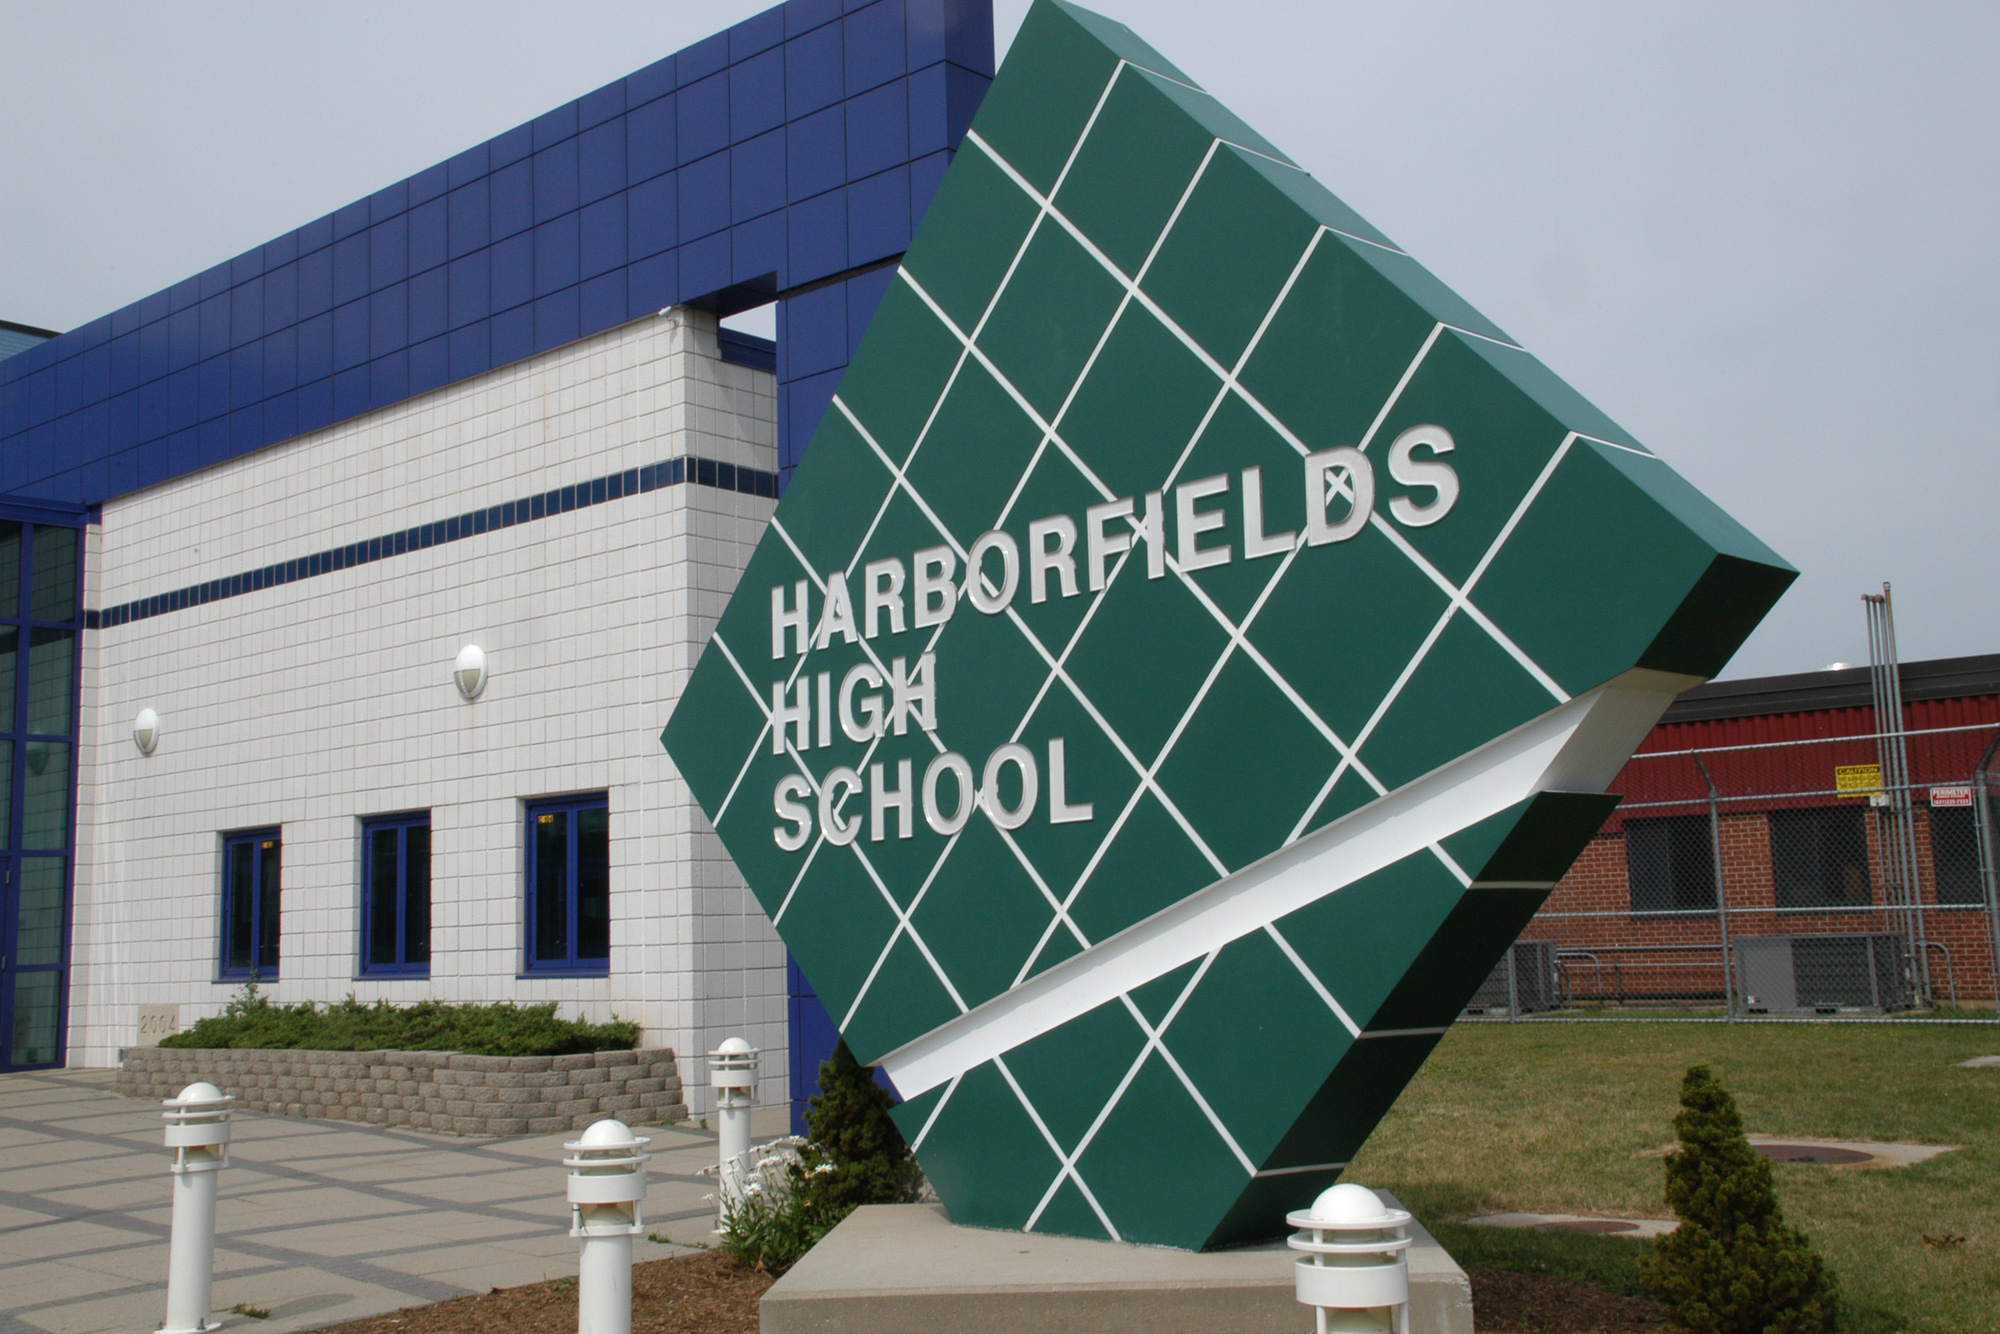 Harborfields-high-school-w1.jpg